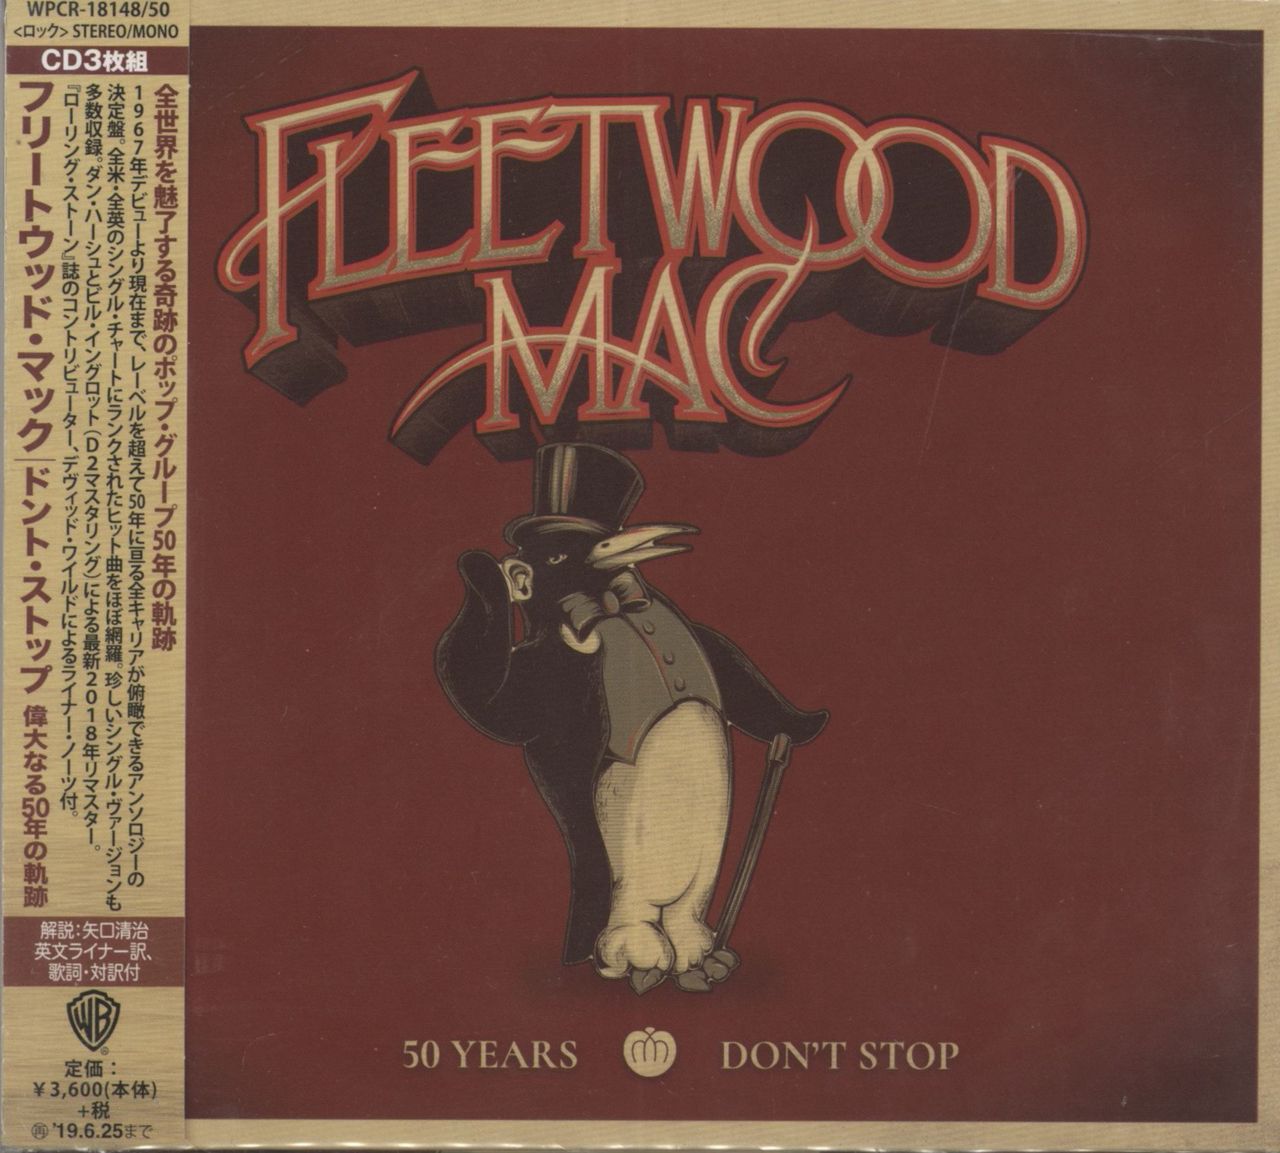 Fleetwood Mac 50 Years - Don't Stop Japanese 3-CD set — RareVinyl.com